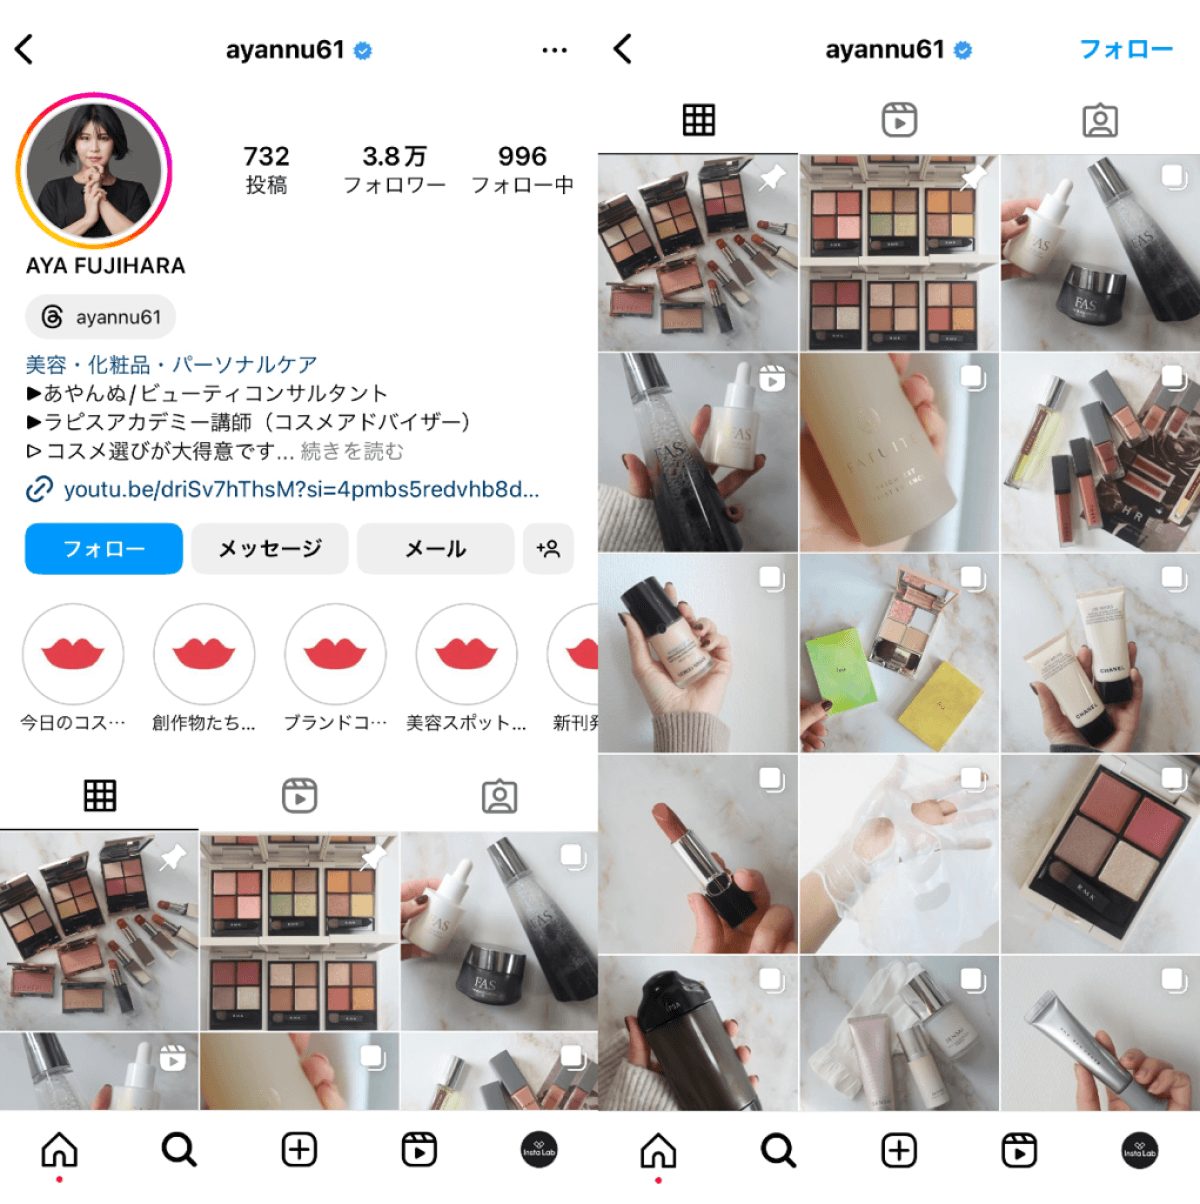 instagram-account-ayannu61